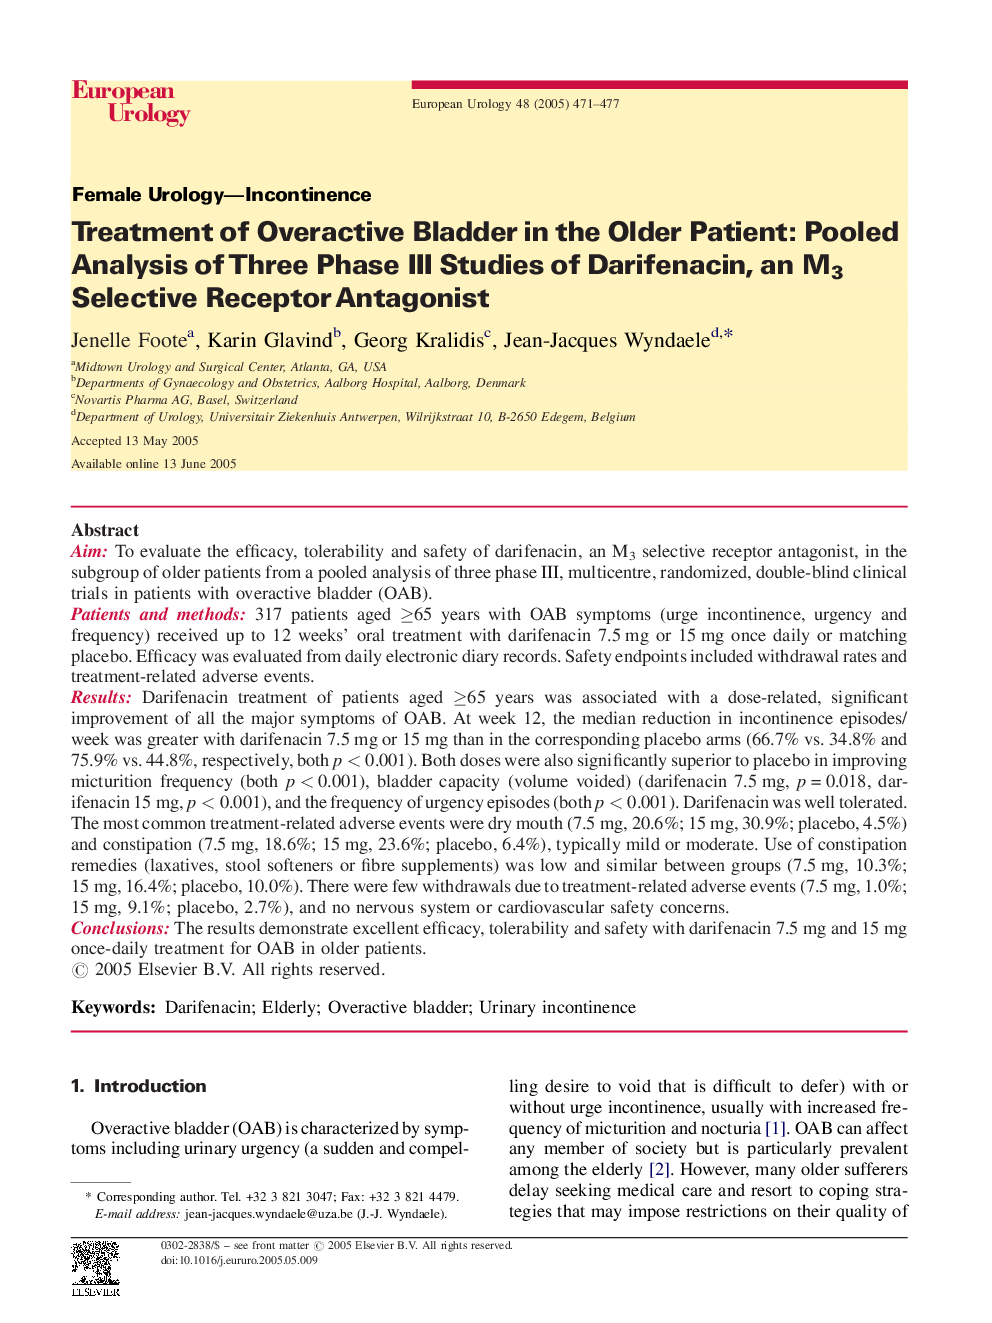 Treatment of Overactive Bladder in the Older Patient: Pooled Analysis of Three Phase III Studies of Darifenacin, an M3 Selective Receptor Antagonist